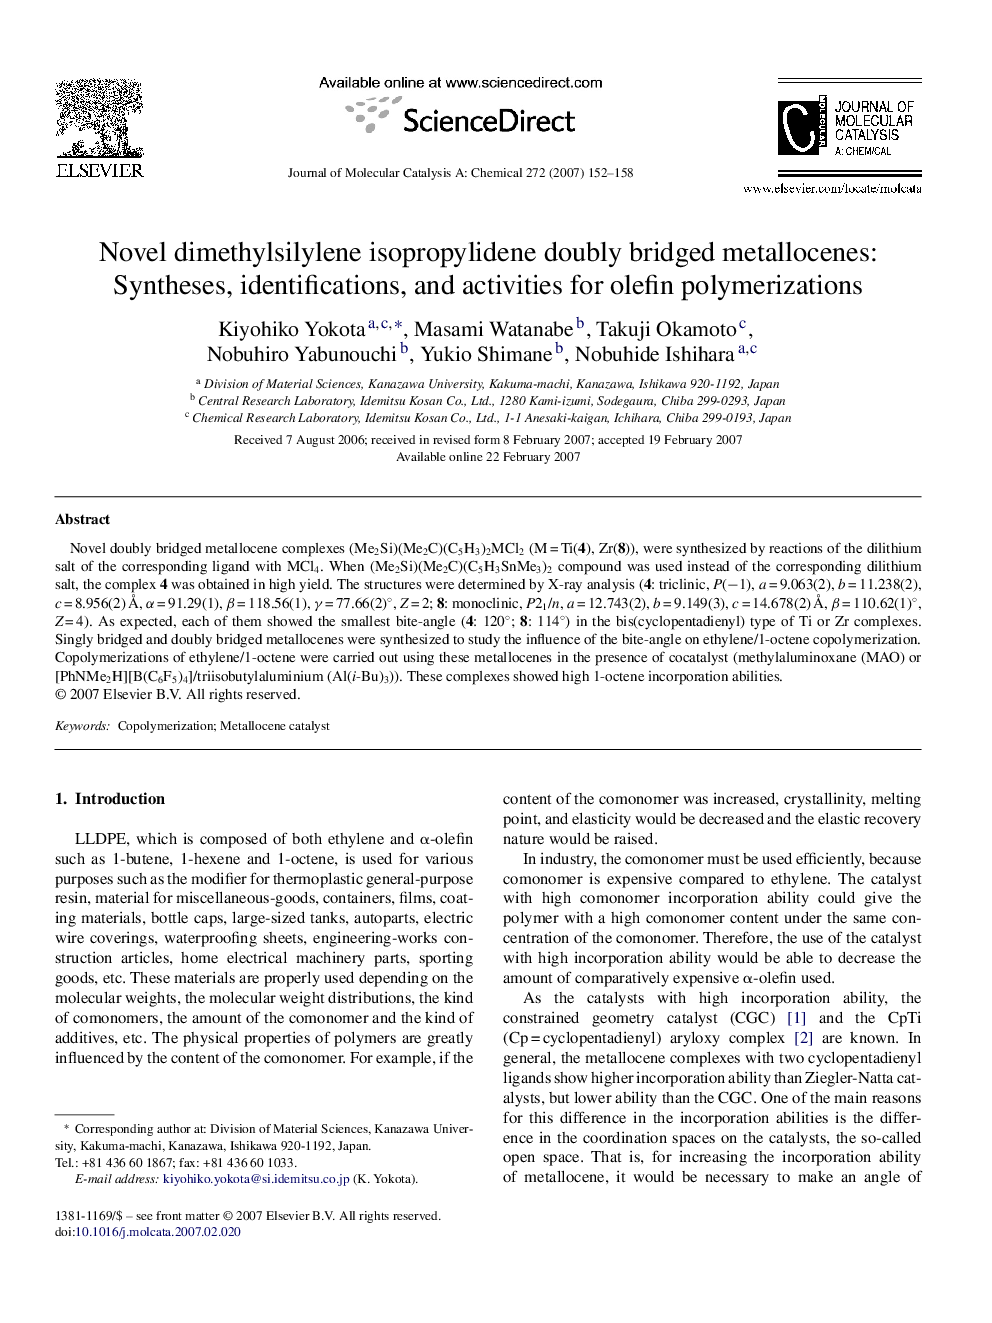 Novel dimethylsilylene isopropylidene doubly bridged metallocenes: Syntheses, identifications, and activities for olefin polymerizations